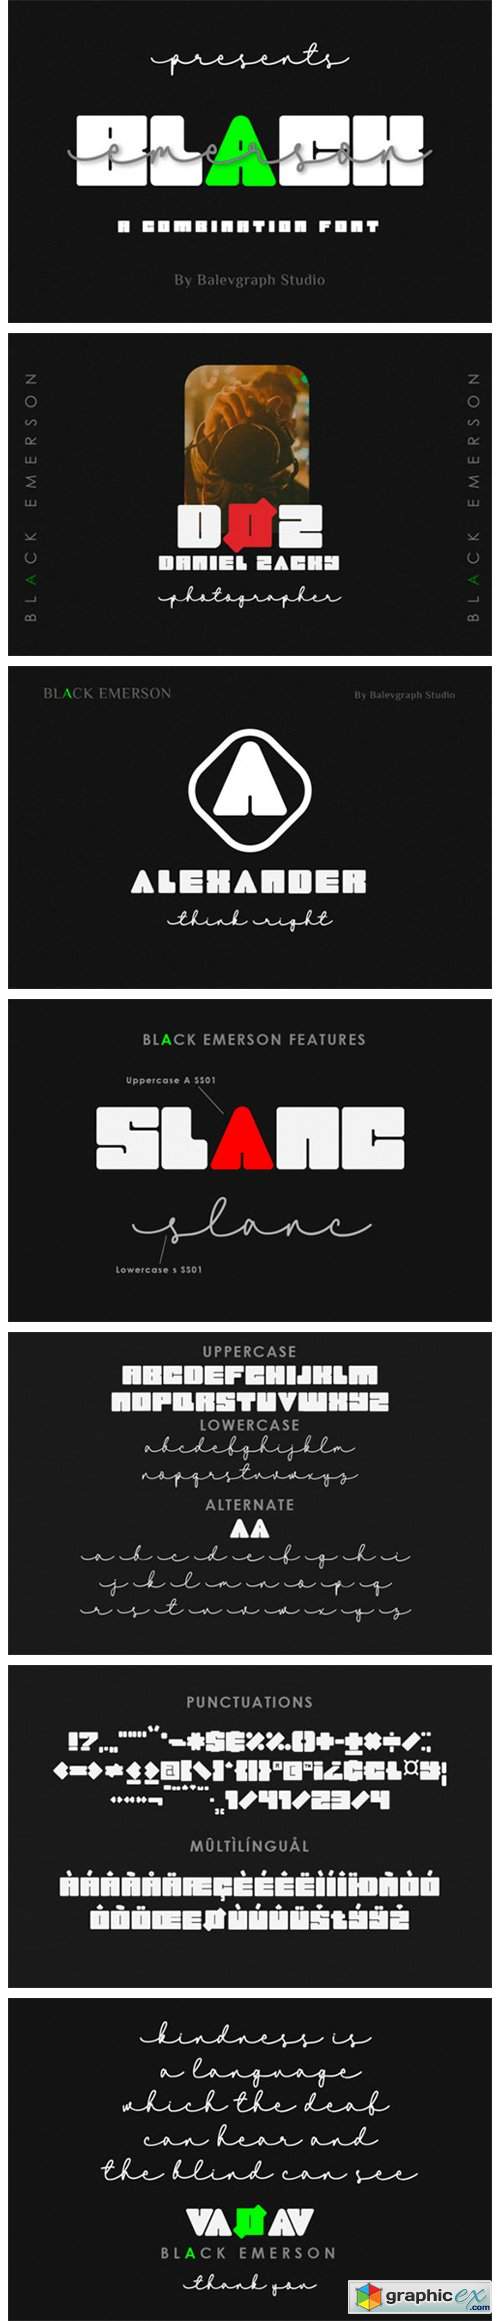  Black Emerson Font 